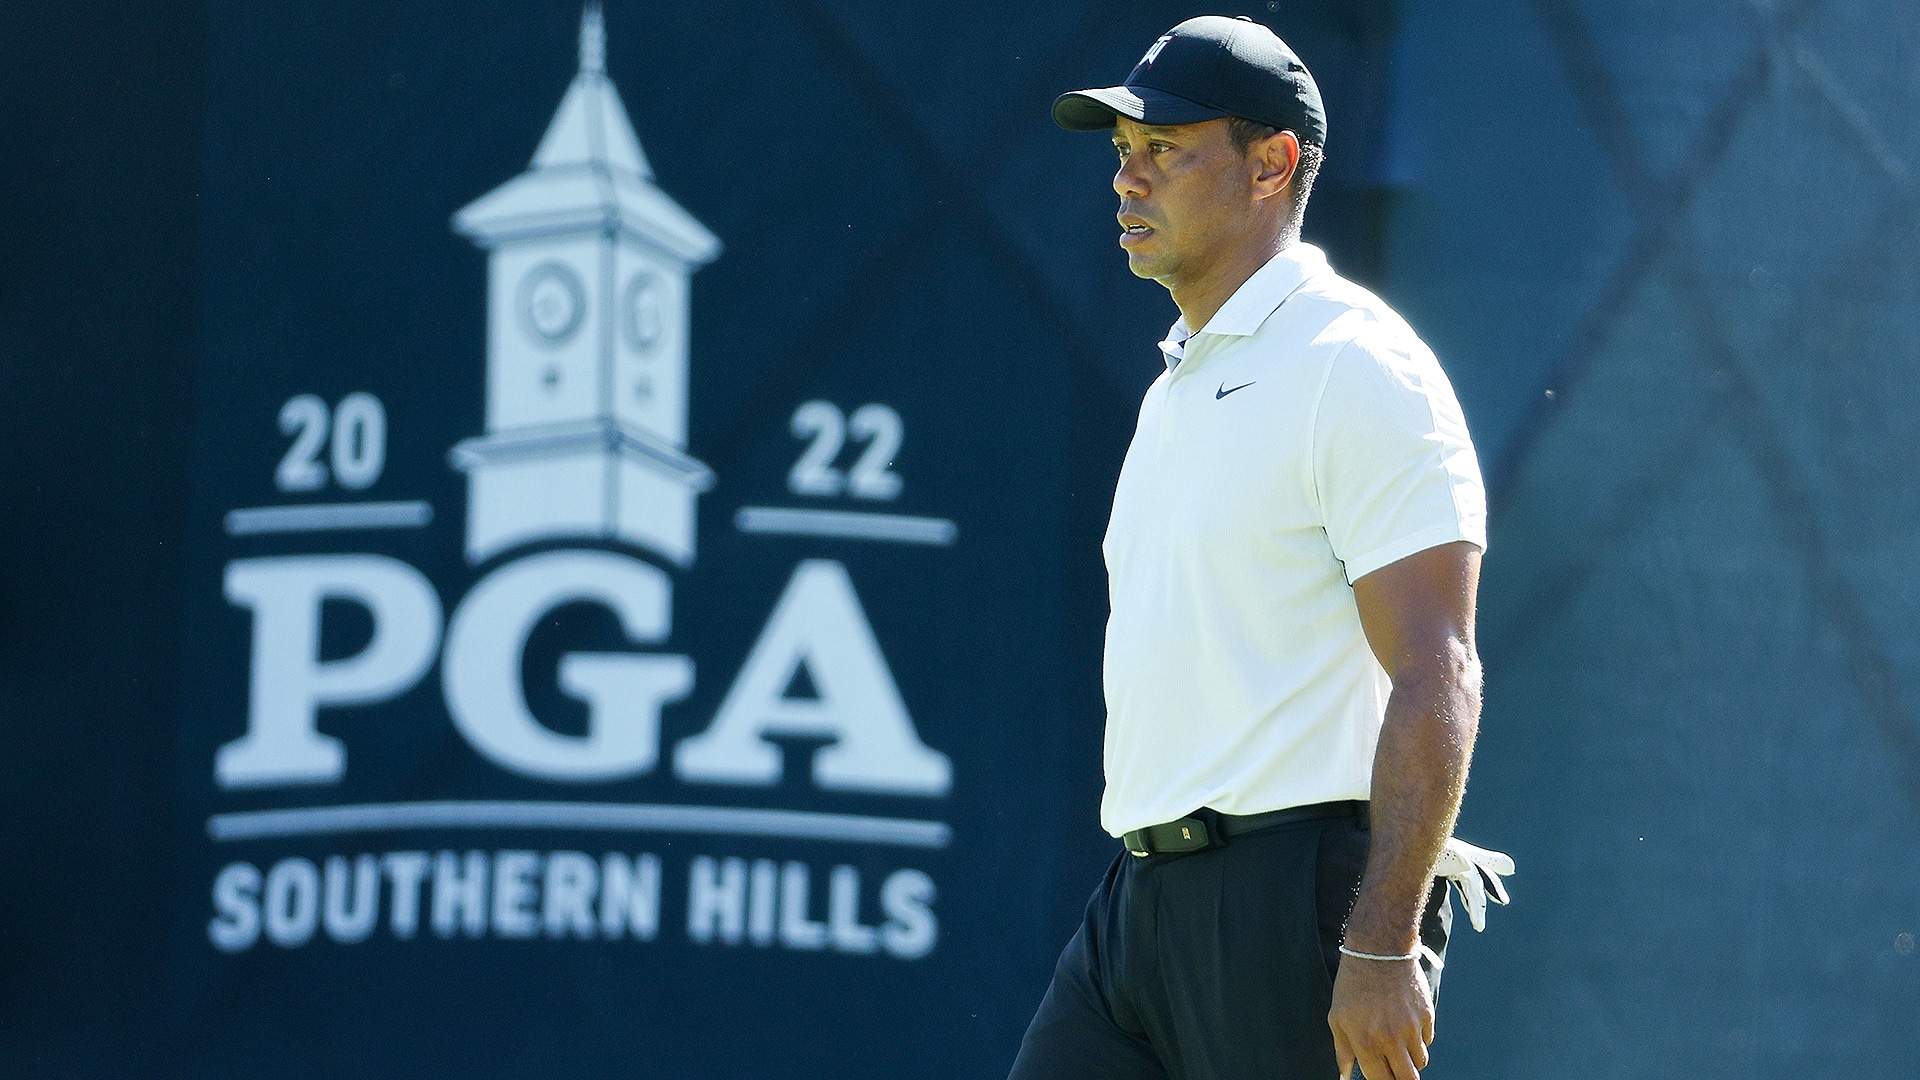 Tiger Woods plays back nine at Southern Hills as PGA Championship prep continues